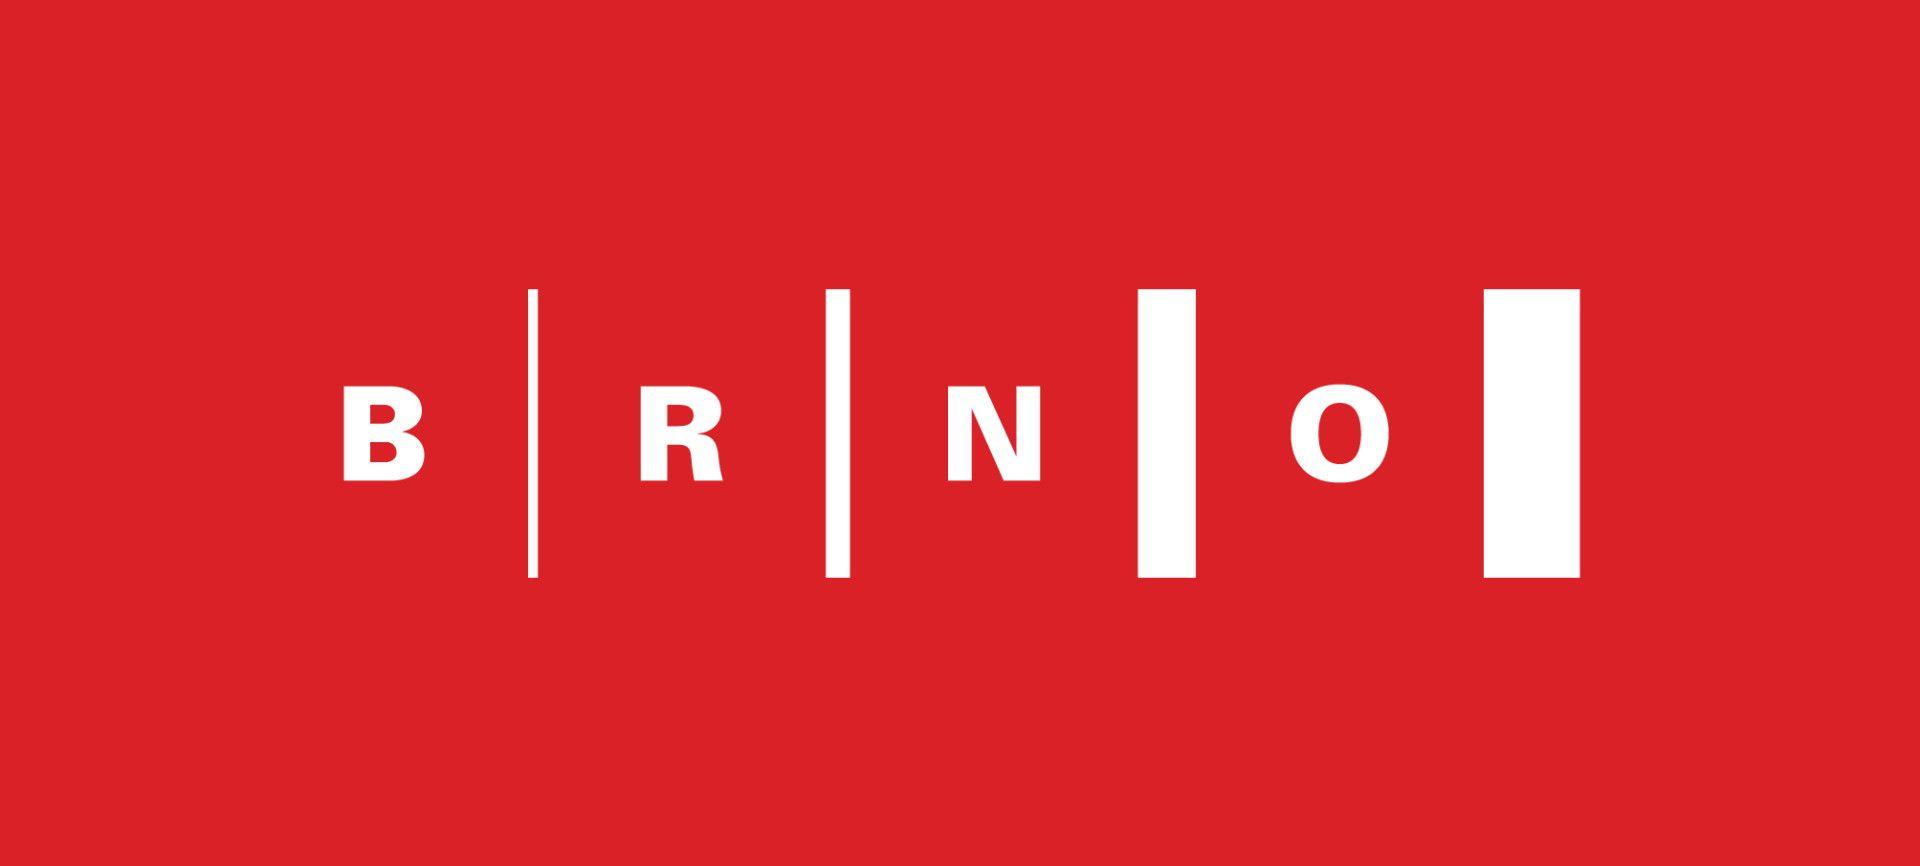 Brno Logo - Partners - MuniMUN